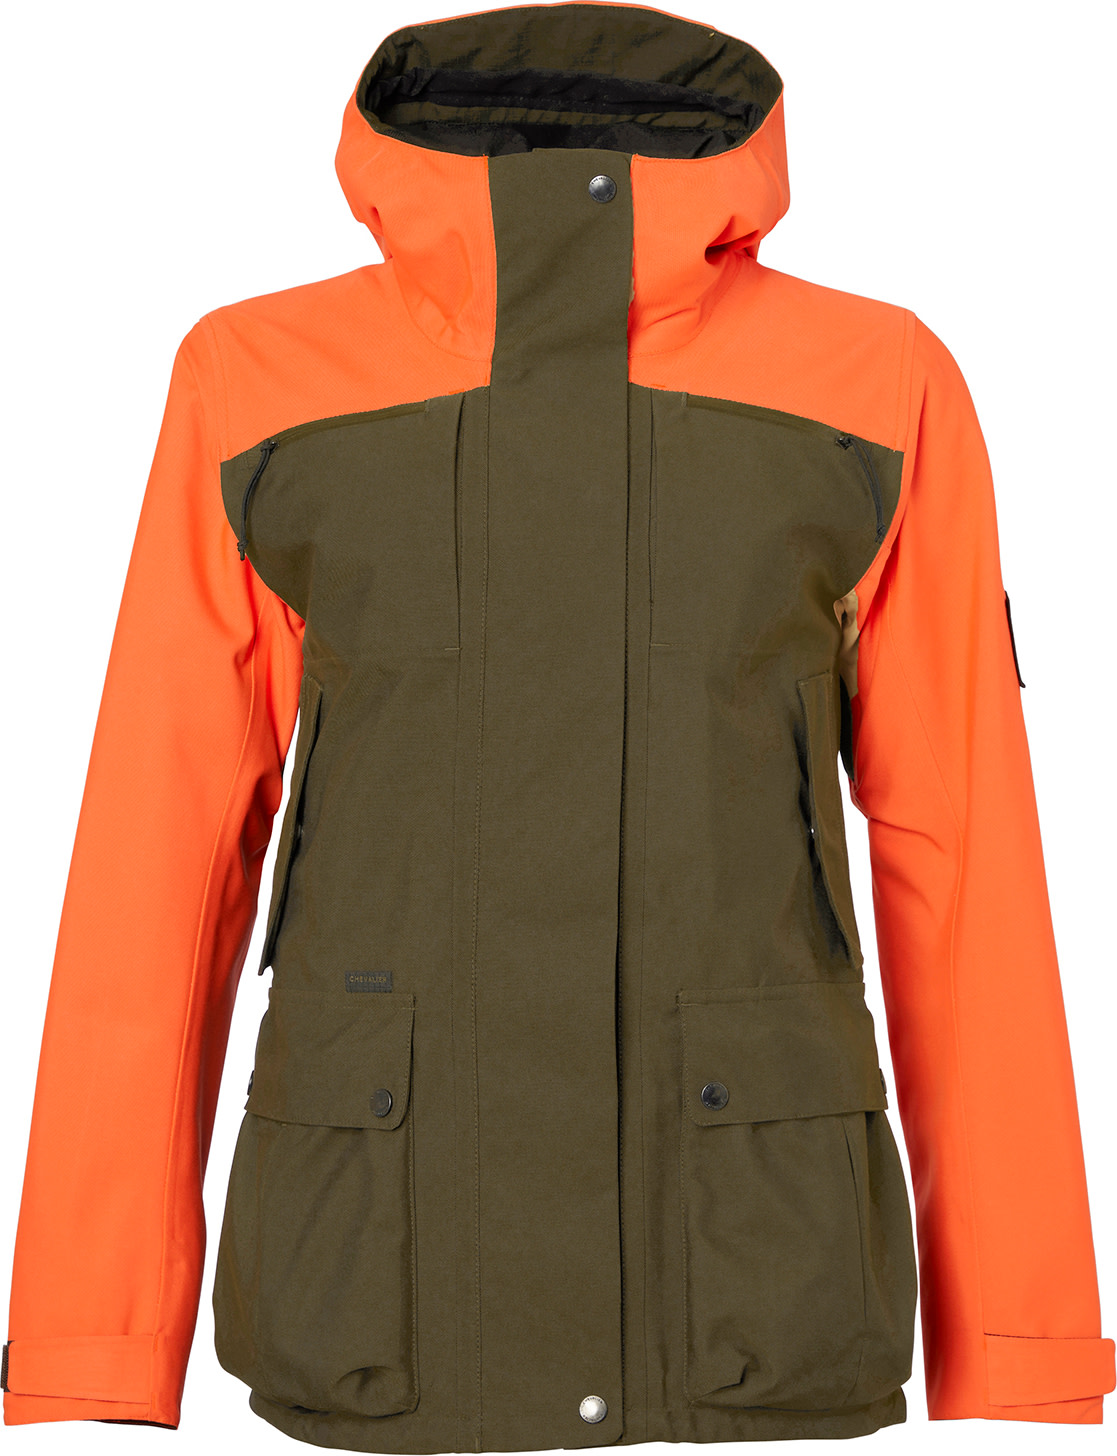 Women’s Endeavor Chevalite Jacket 2.0 High Vis Orange